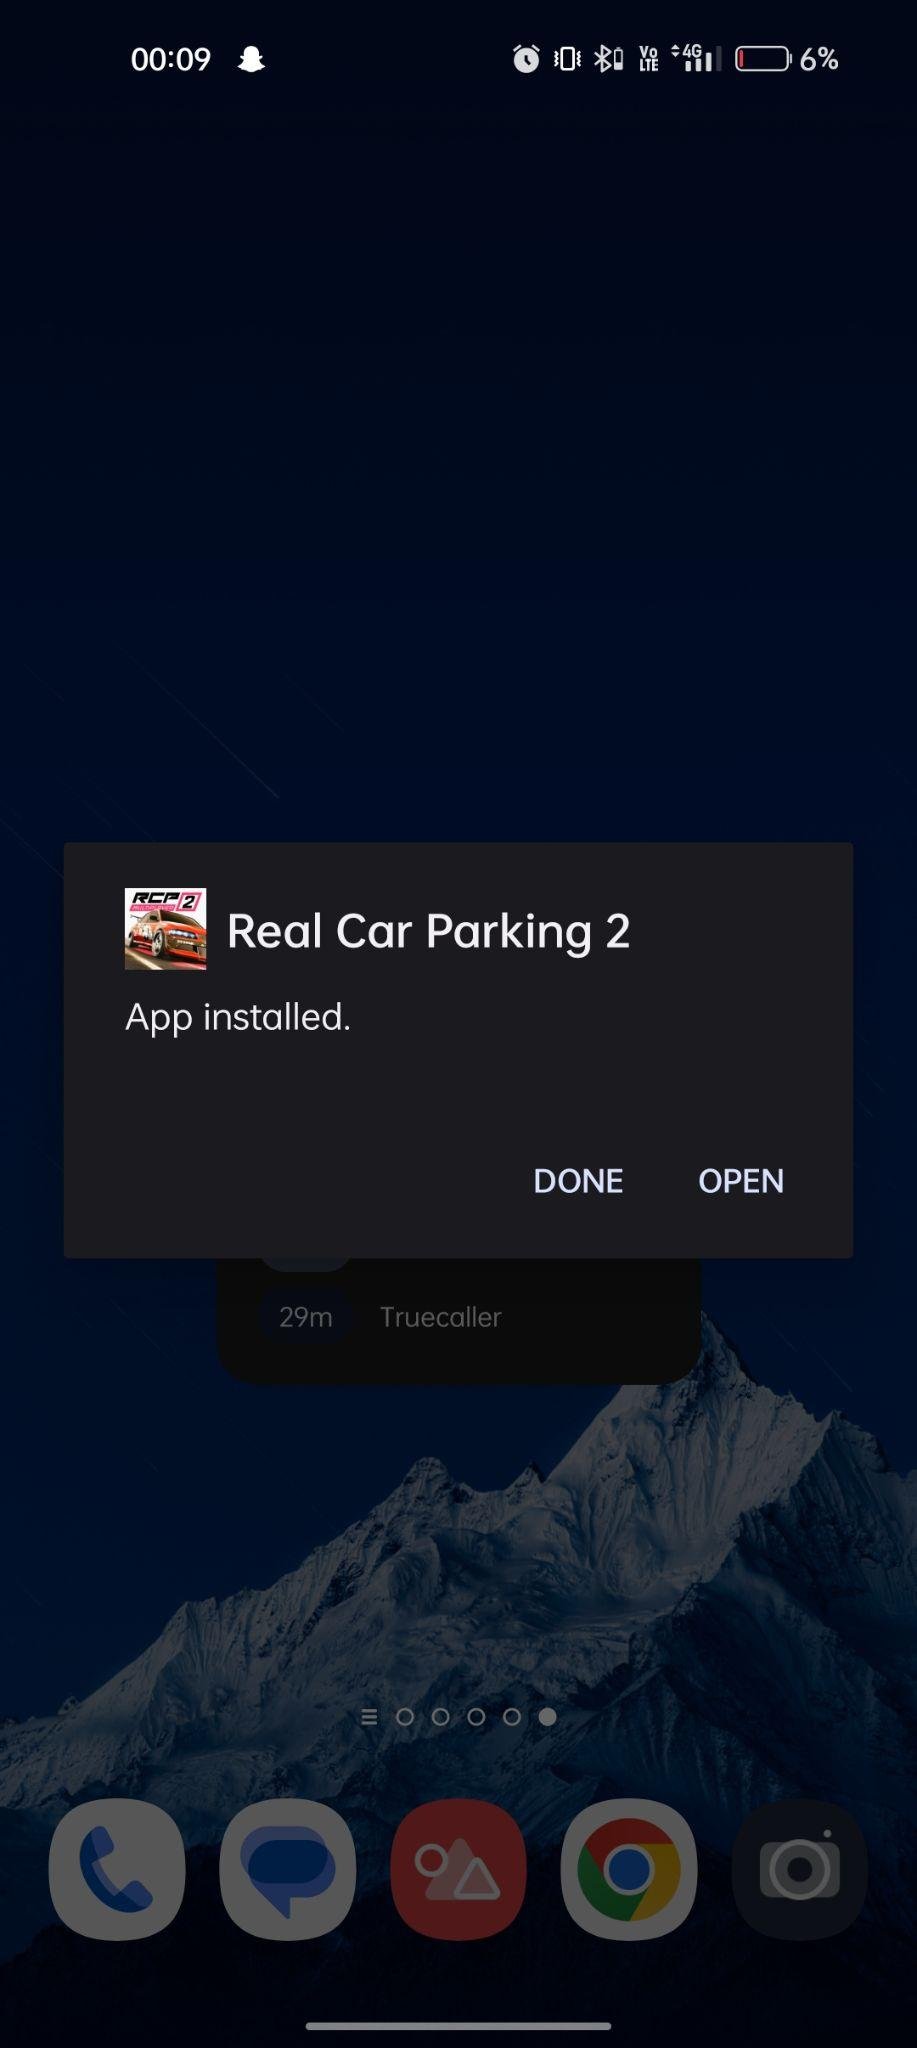 Real Car Parking 2 apk installed